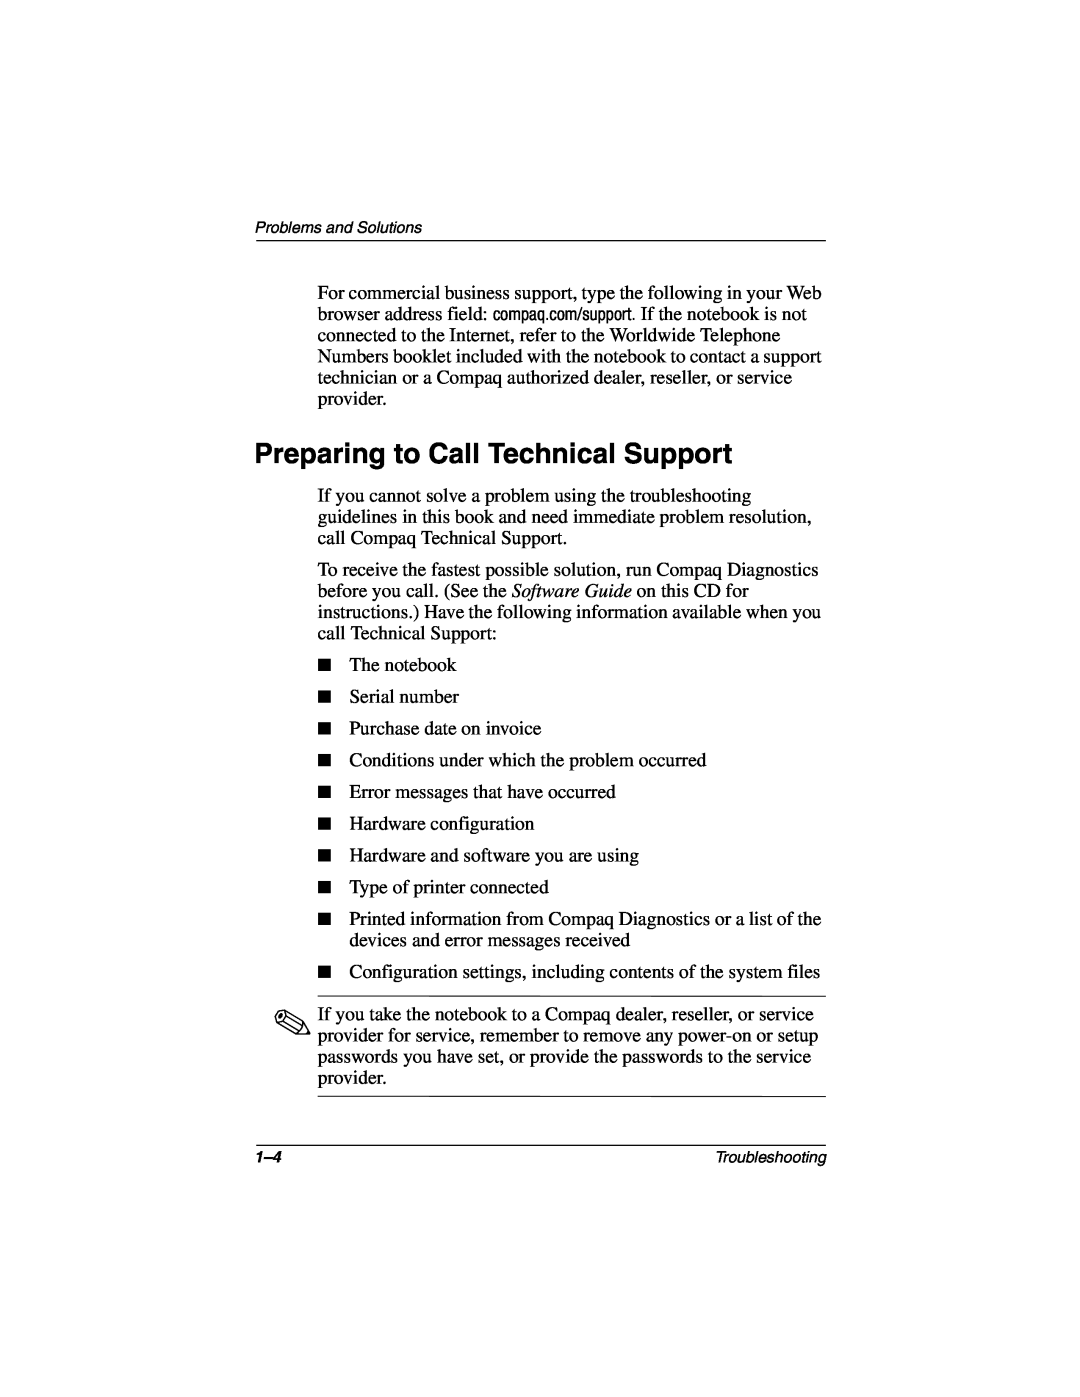 DeWalt 267644-001 manual Preparing to Call Technical Support 